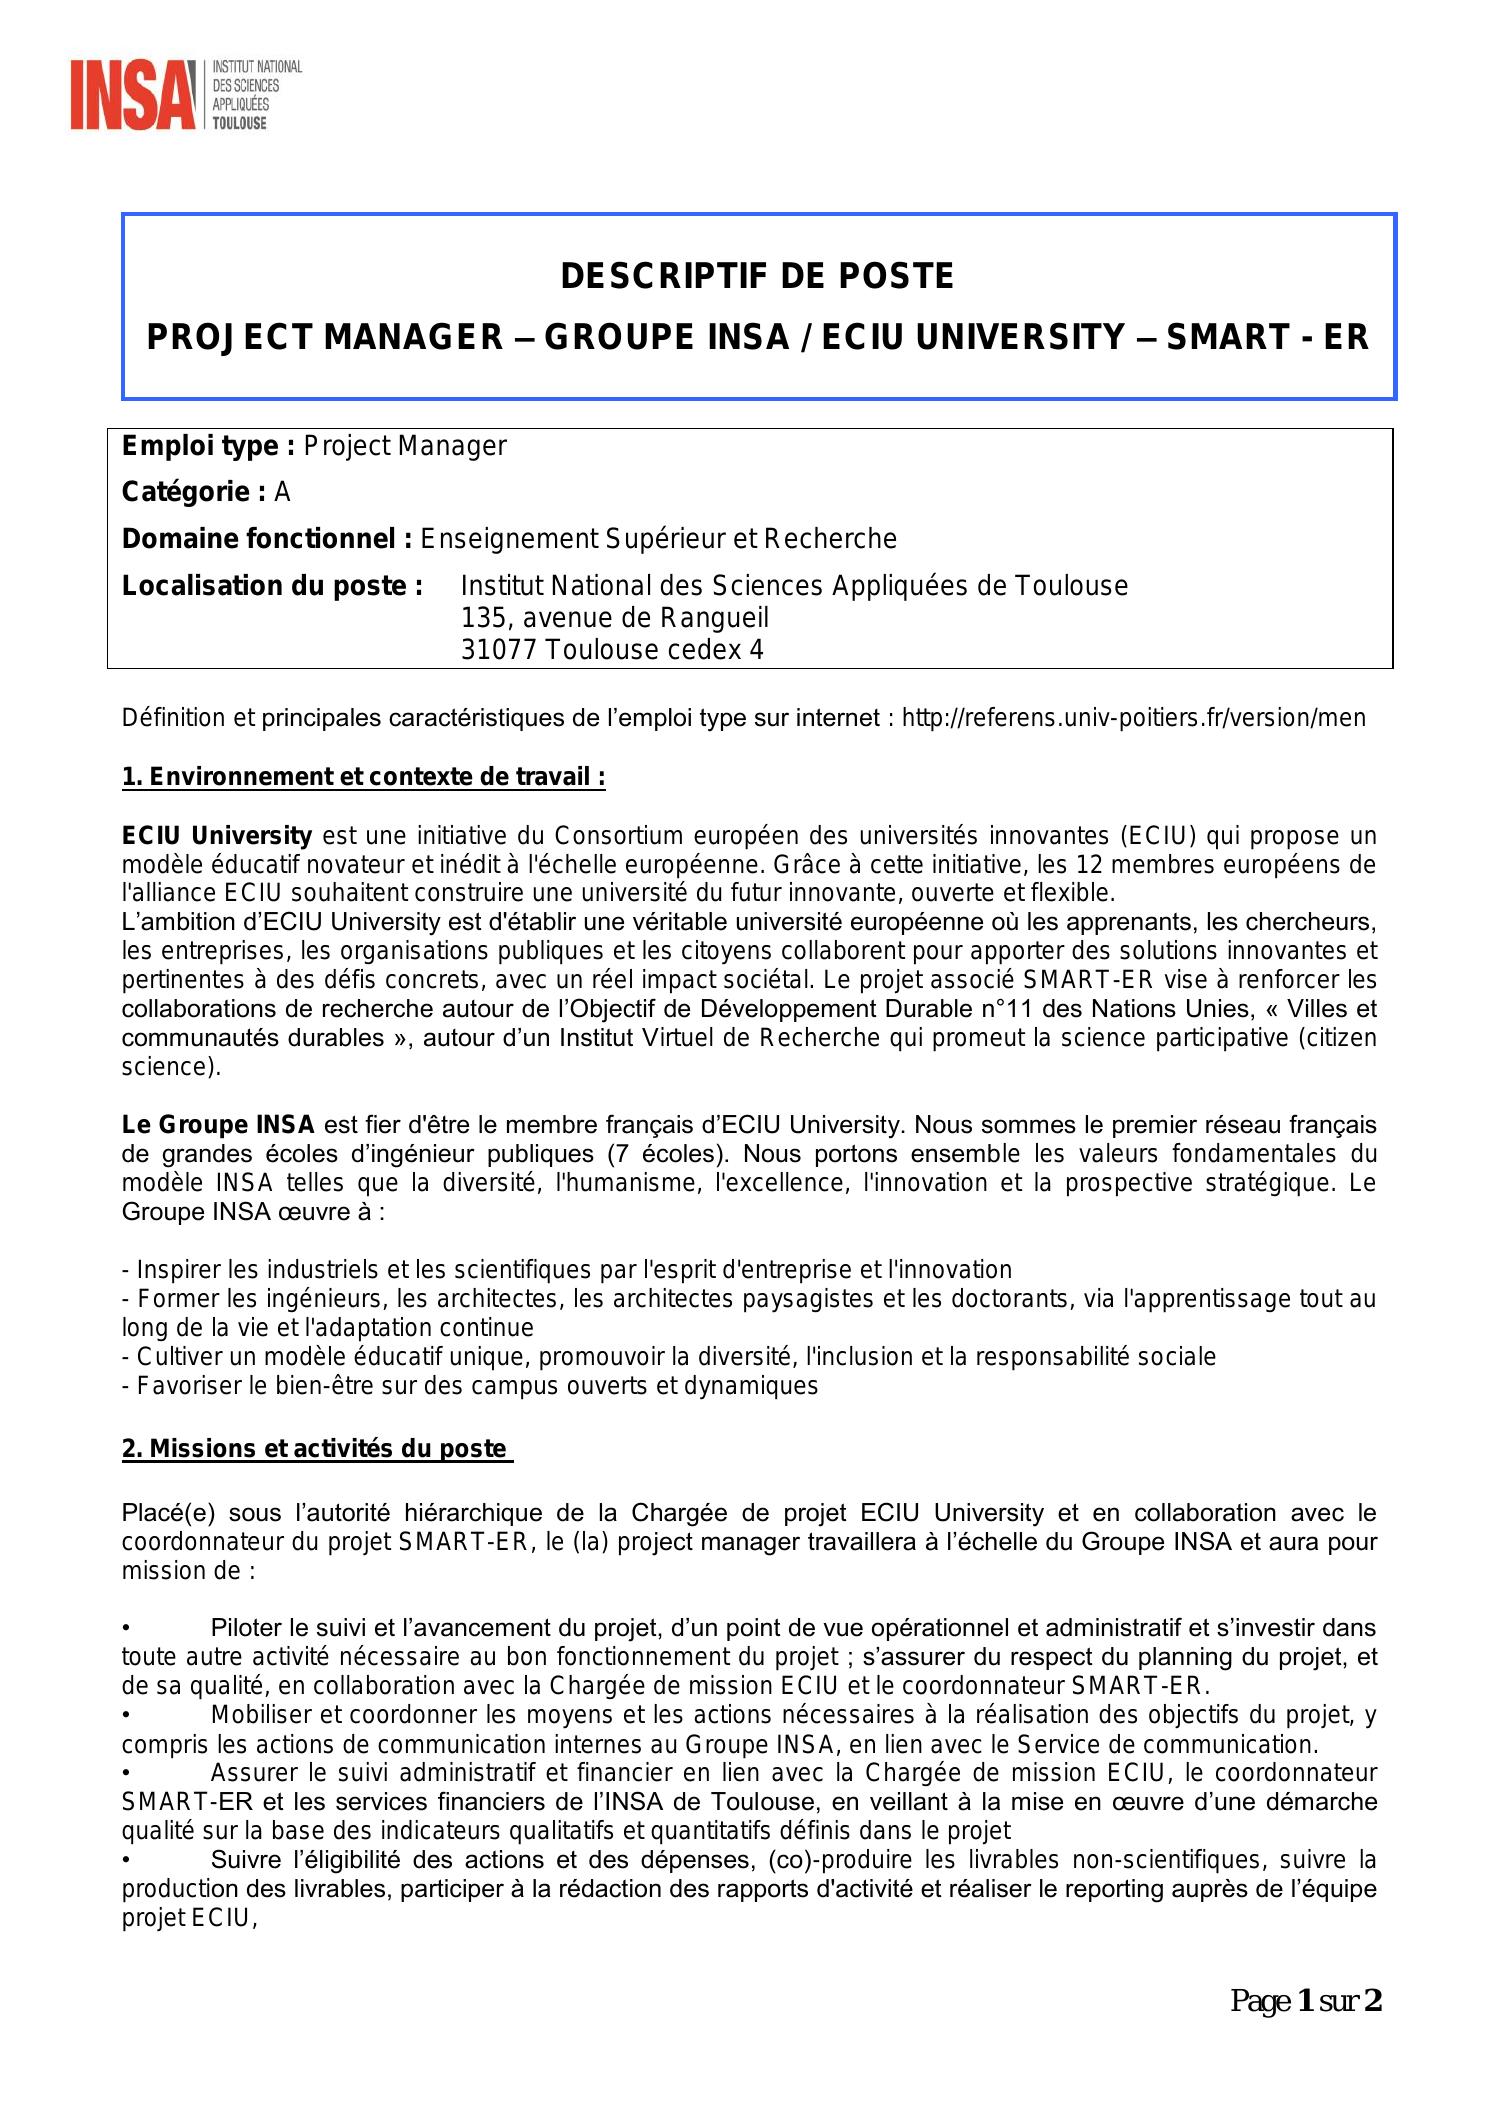 FICHE DE POSTE  PROJECT MANAGER  GROUPE INSA  ECIU11.pdf  DocDroid